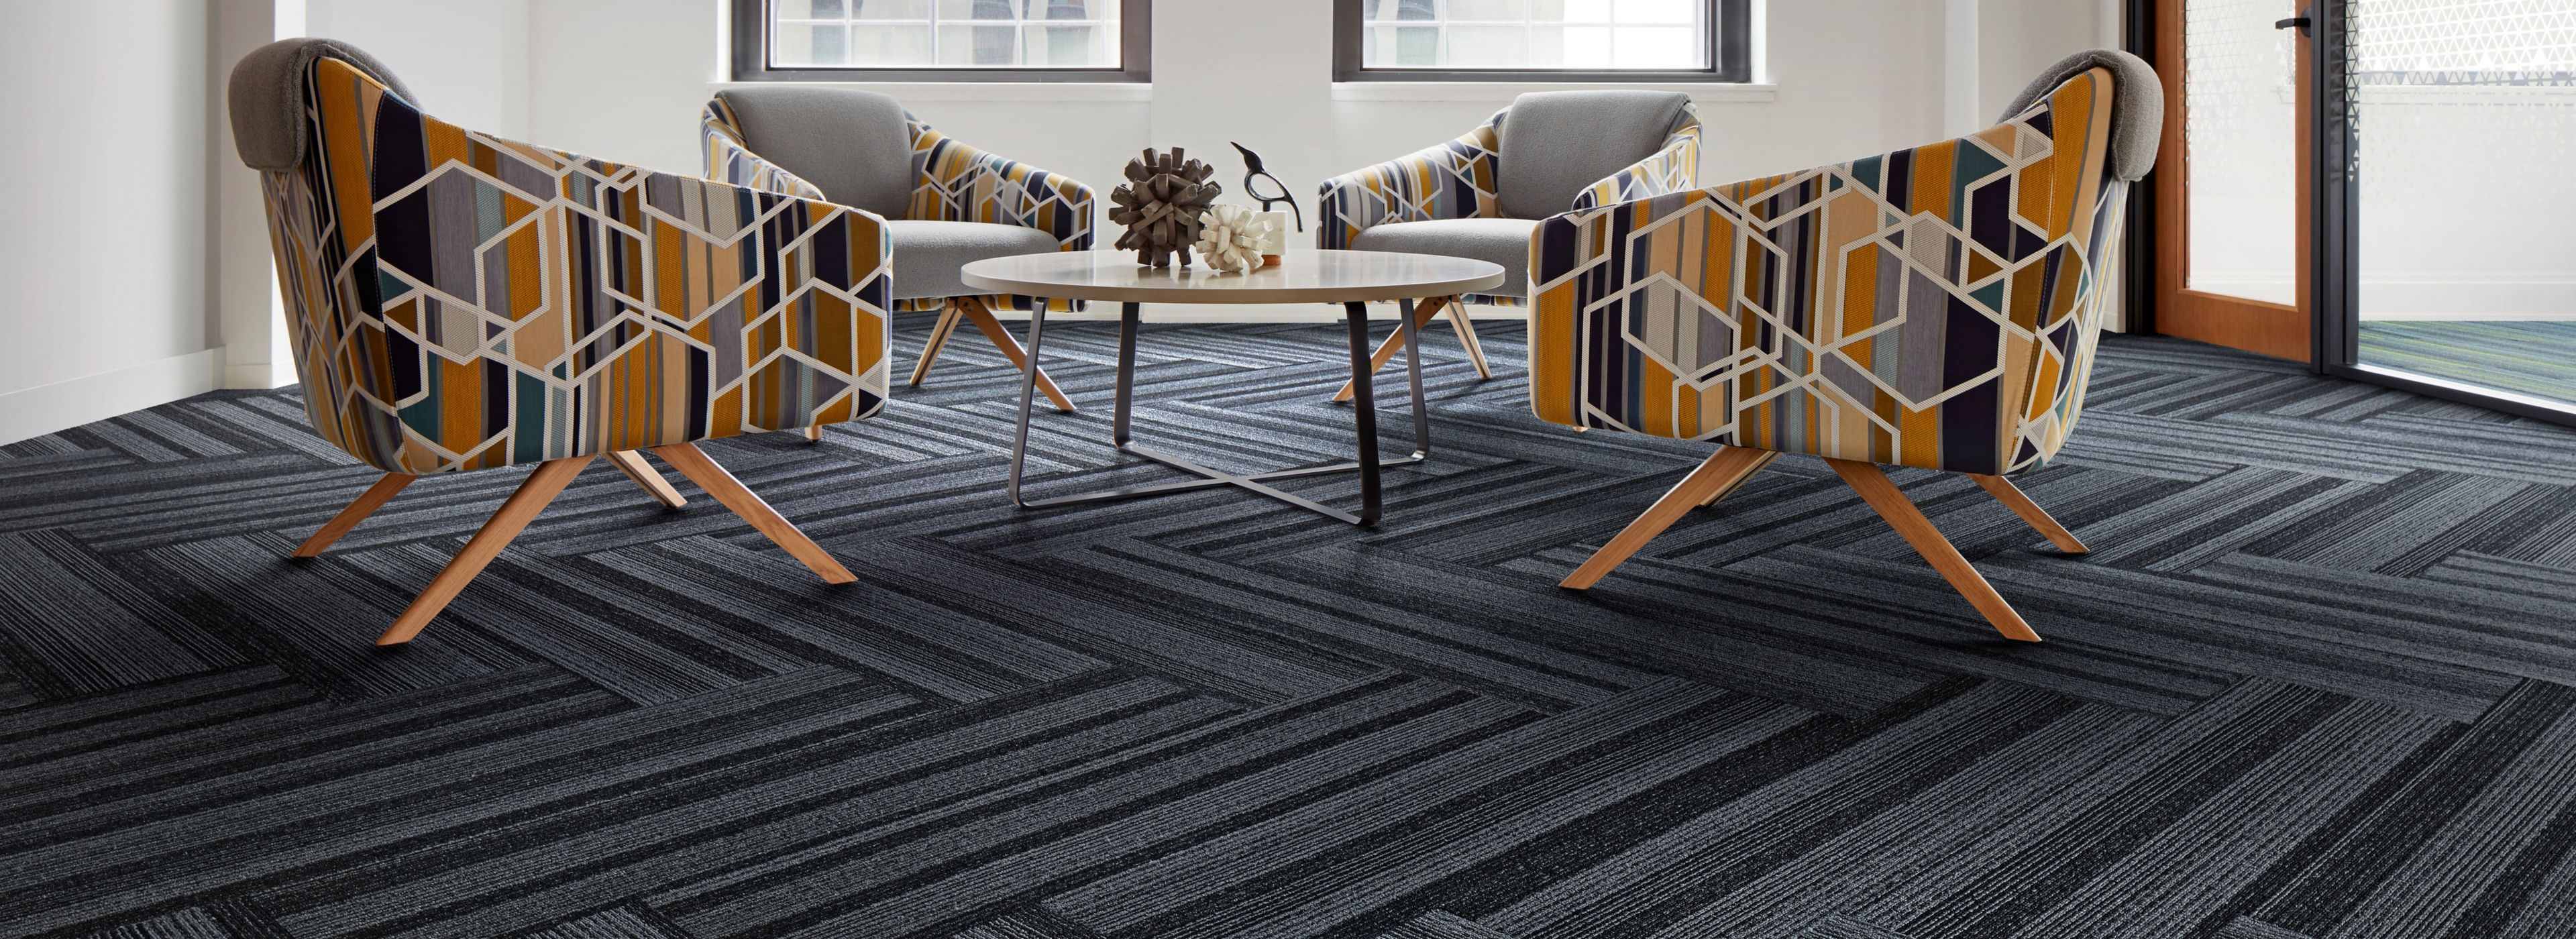 Interface Translucent carpet tile in seating area imagen número 1